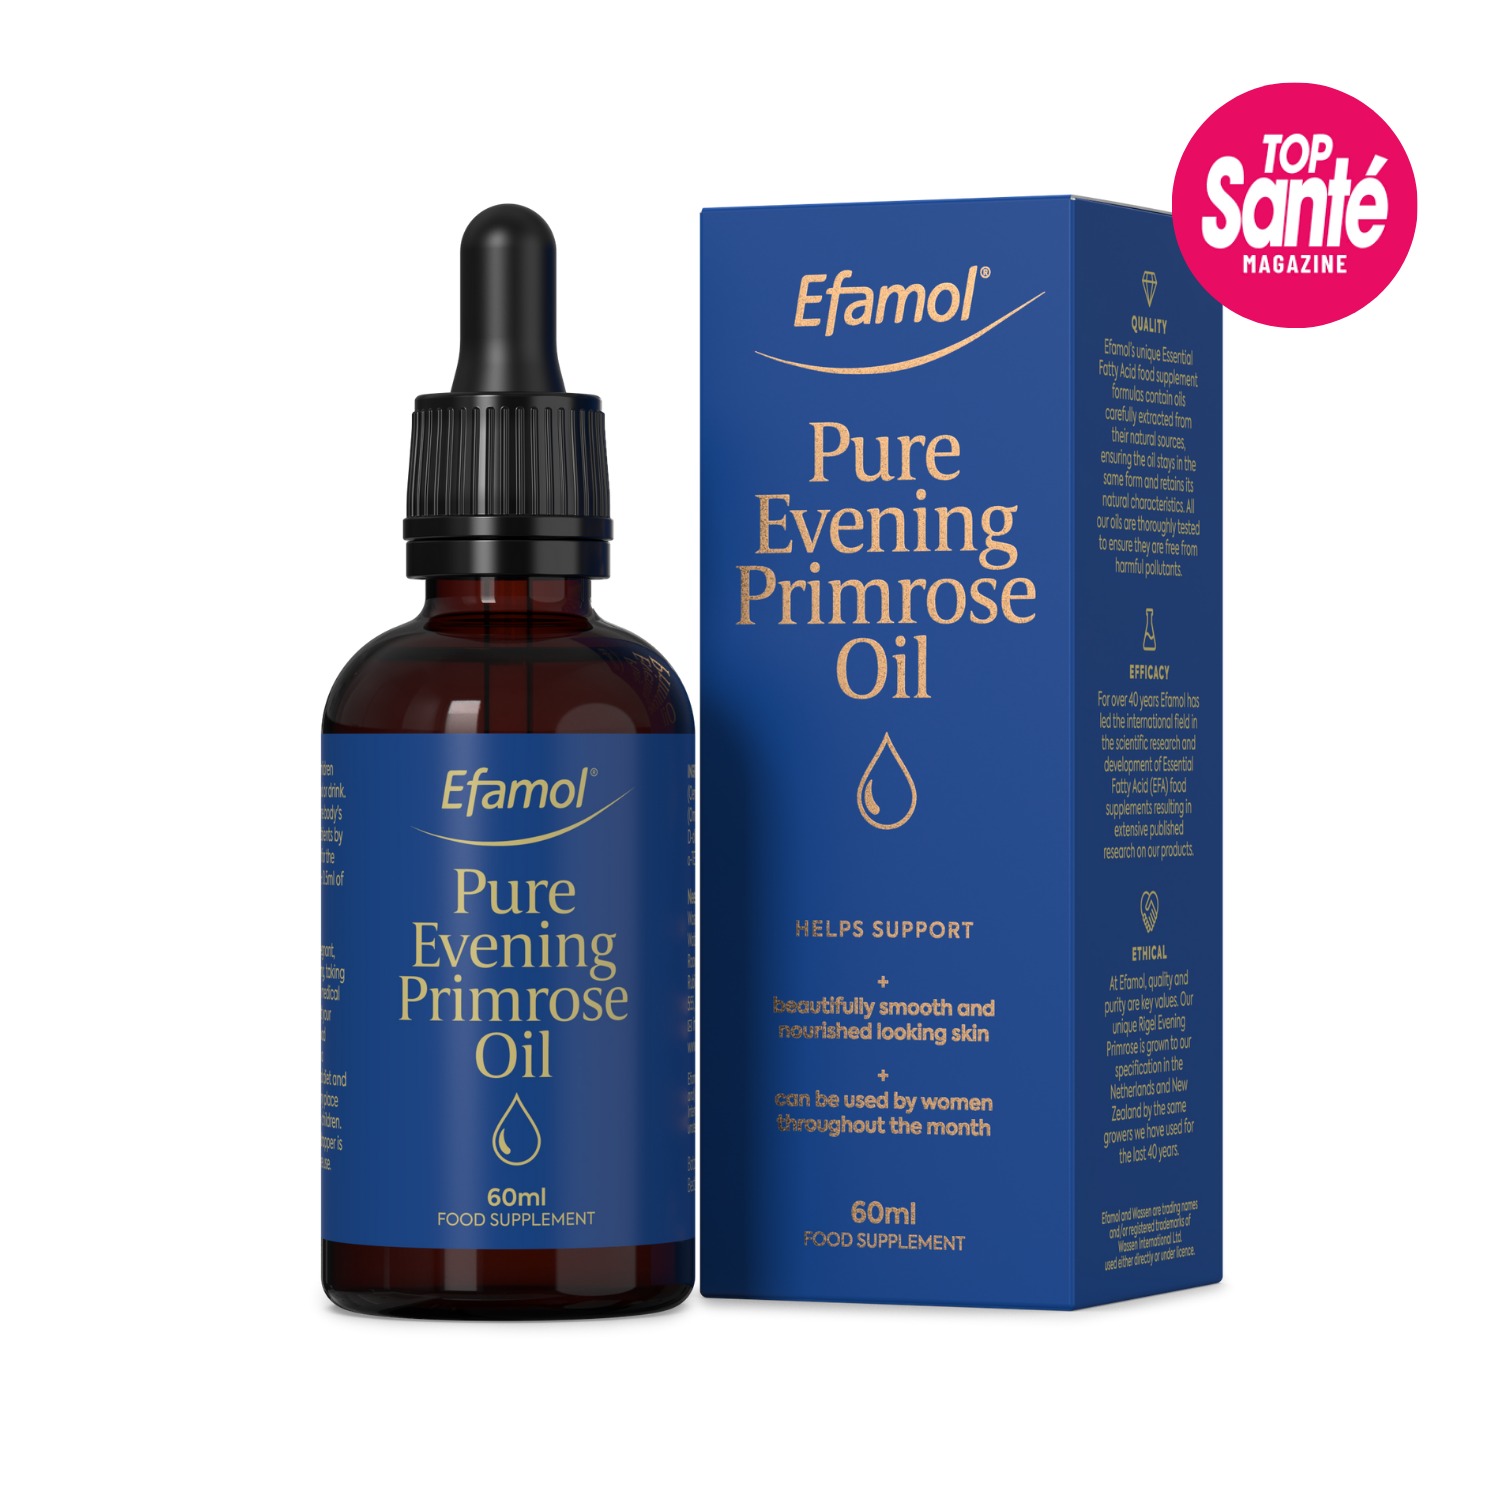 Efamol Evening Primrose Oil Dropper, as featured in Top Sante 